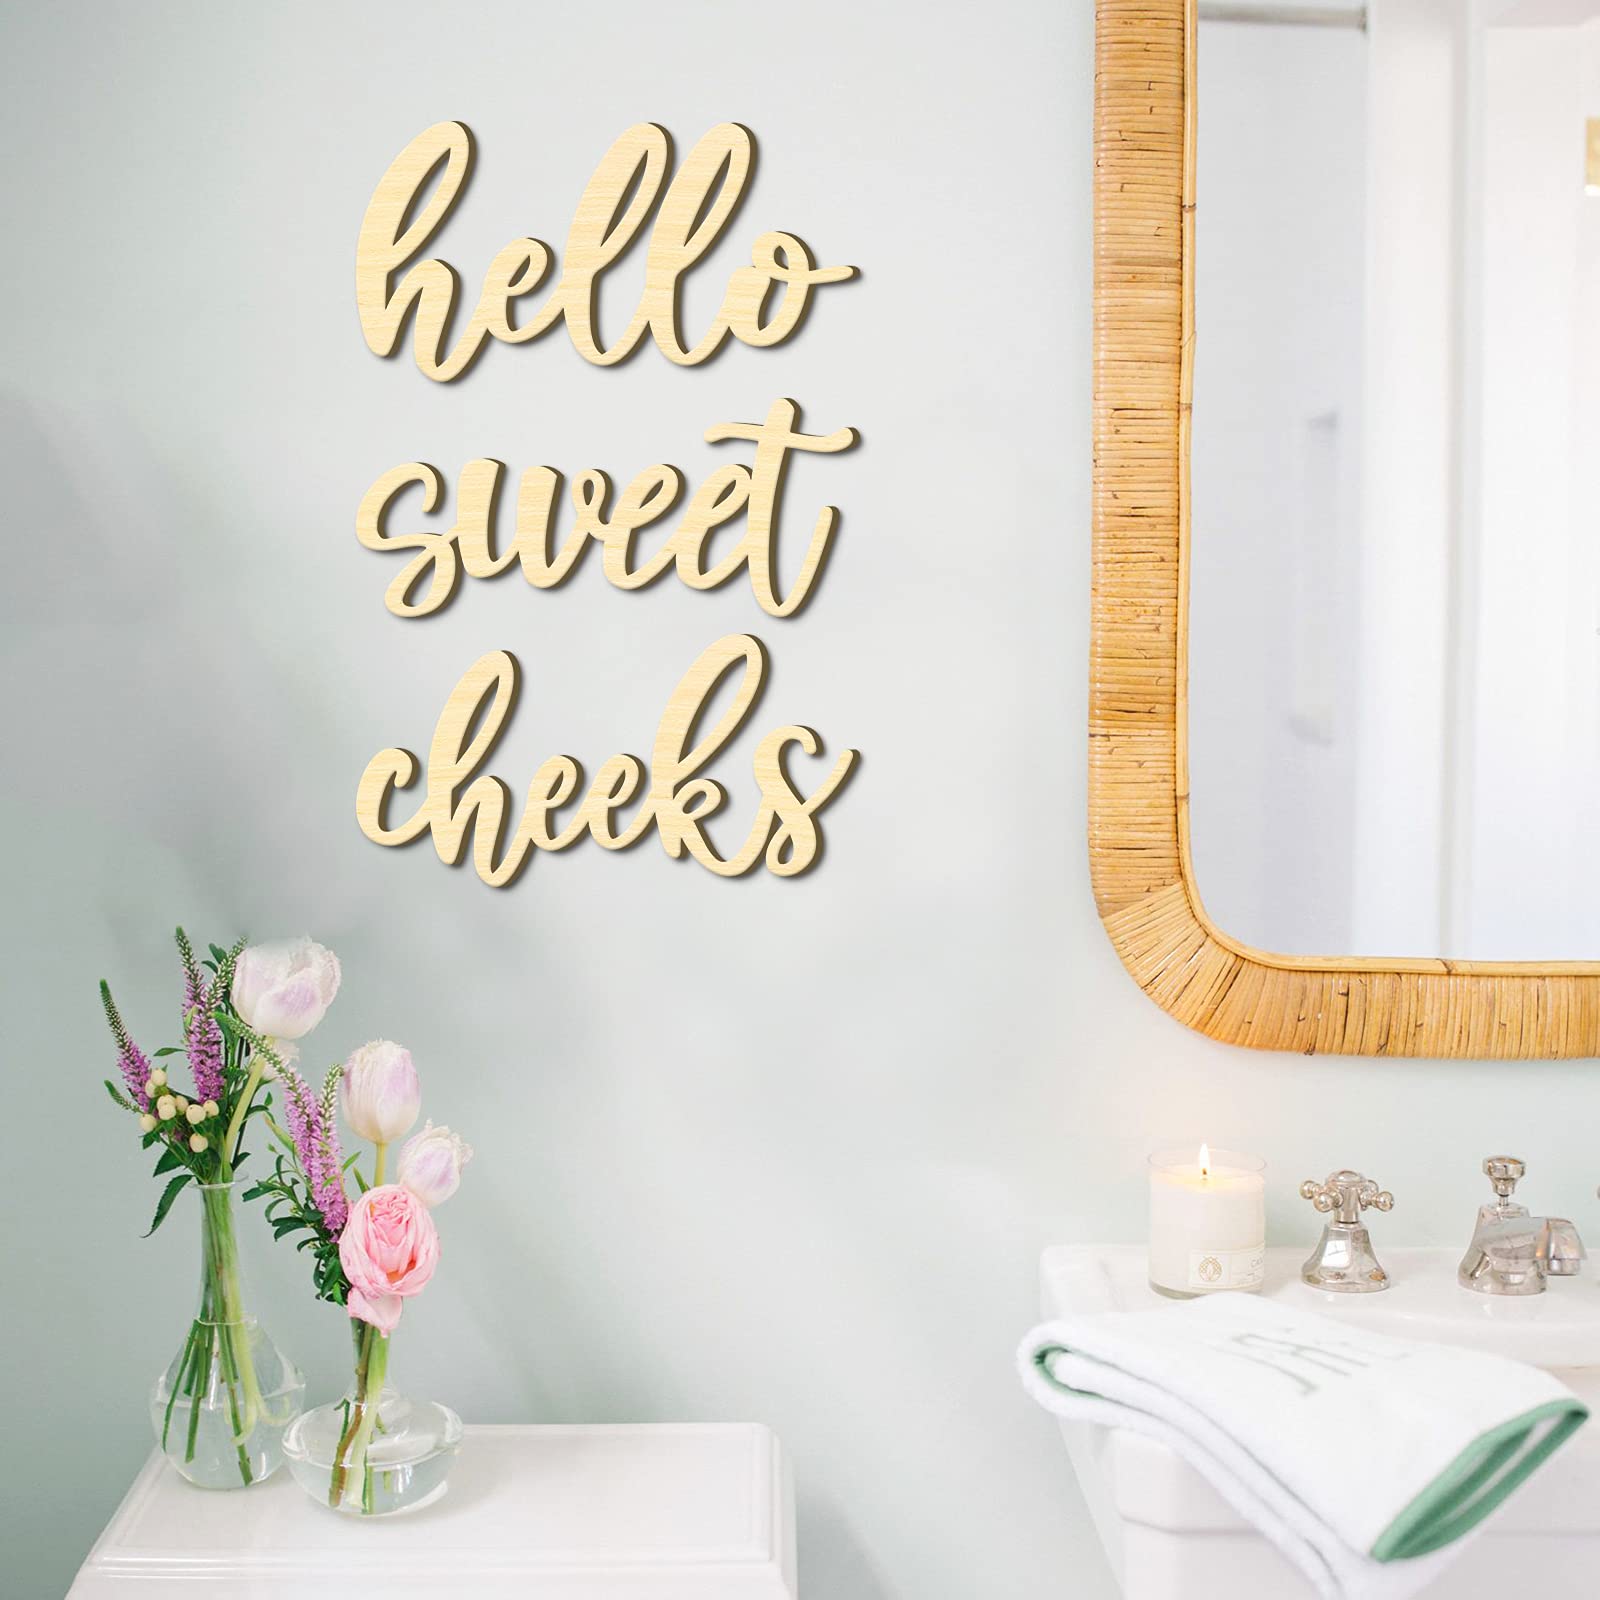 Hello Sweet Cheeks Bathroom Sign Funny Bathroom Wall Sign Cute Bathroom Decor Rustic Farmhouse Home Bathroom Decor Housewarming Gift Idea (Wood color)